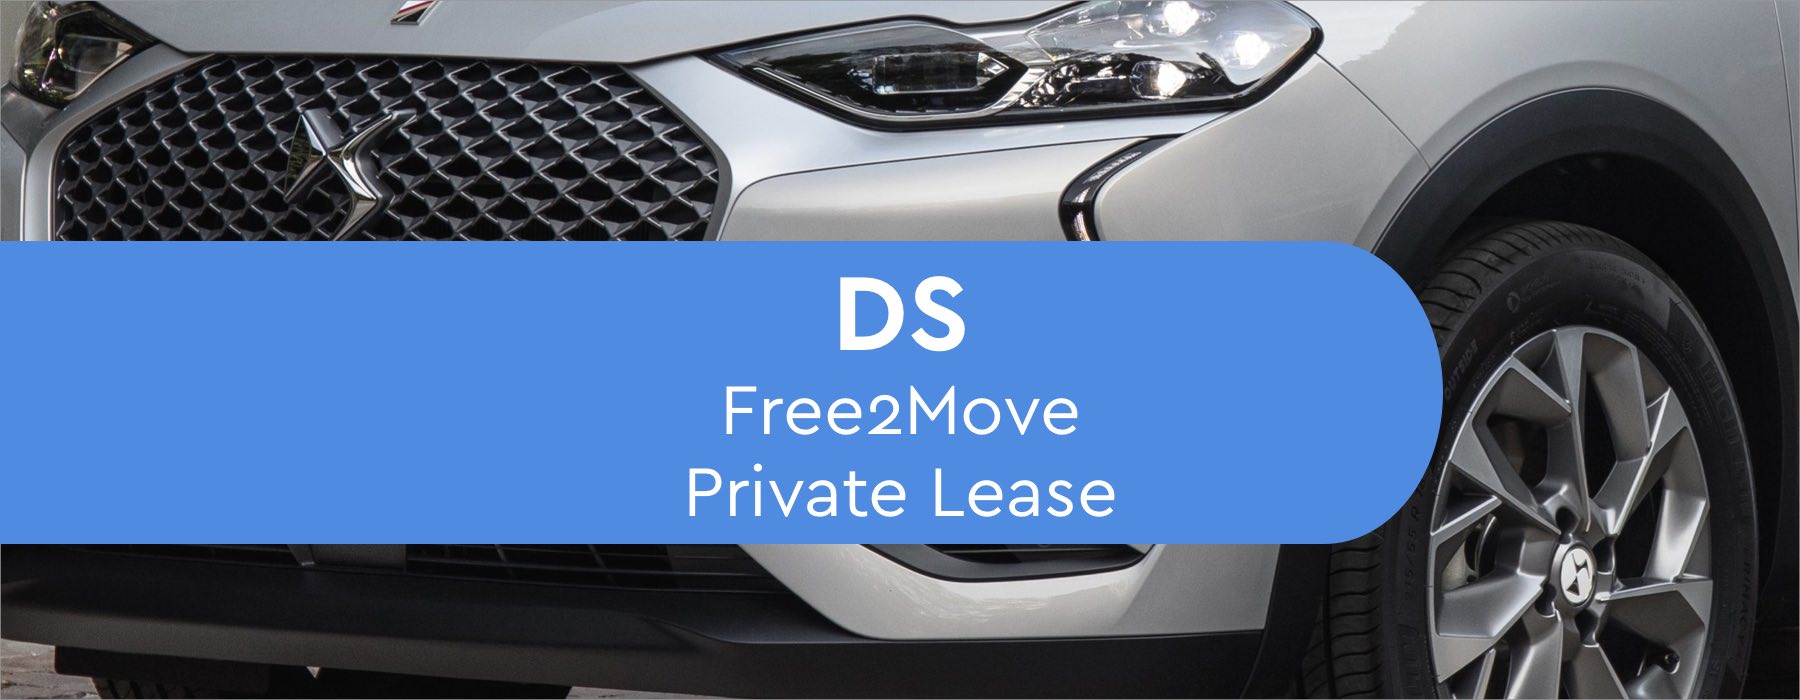 DS free2move Private Lease